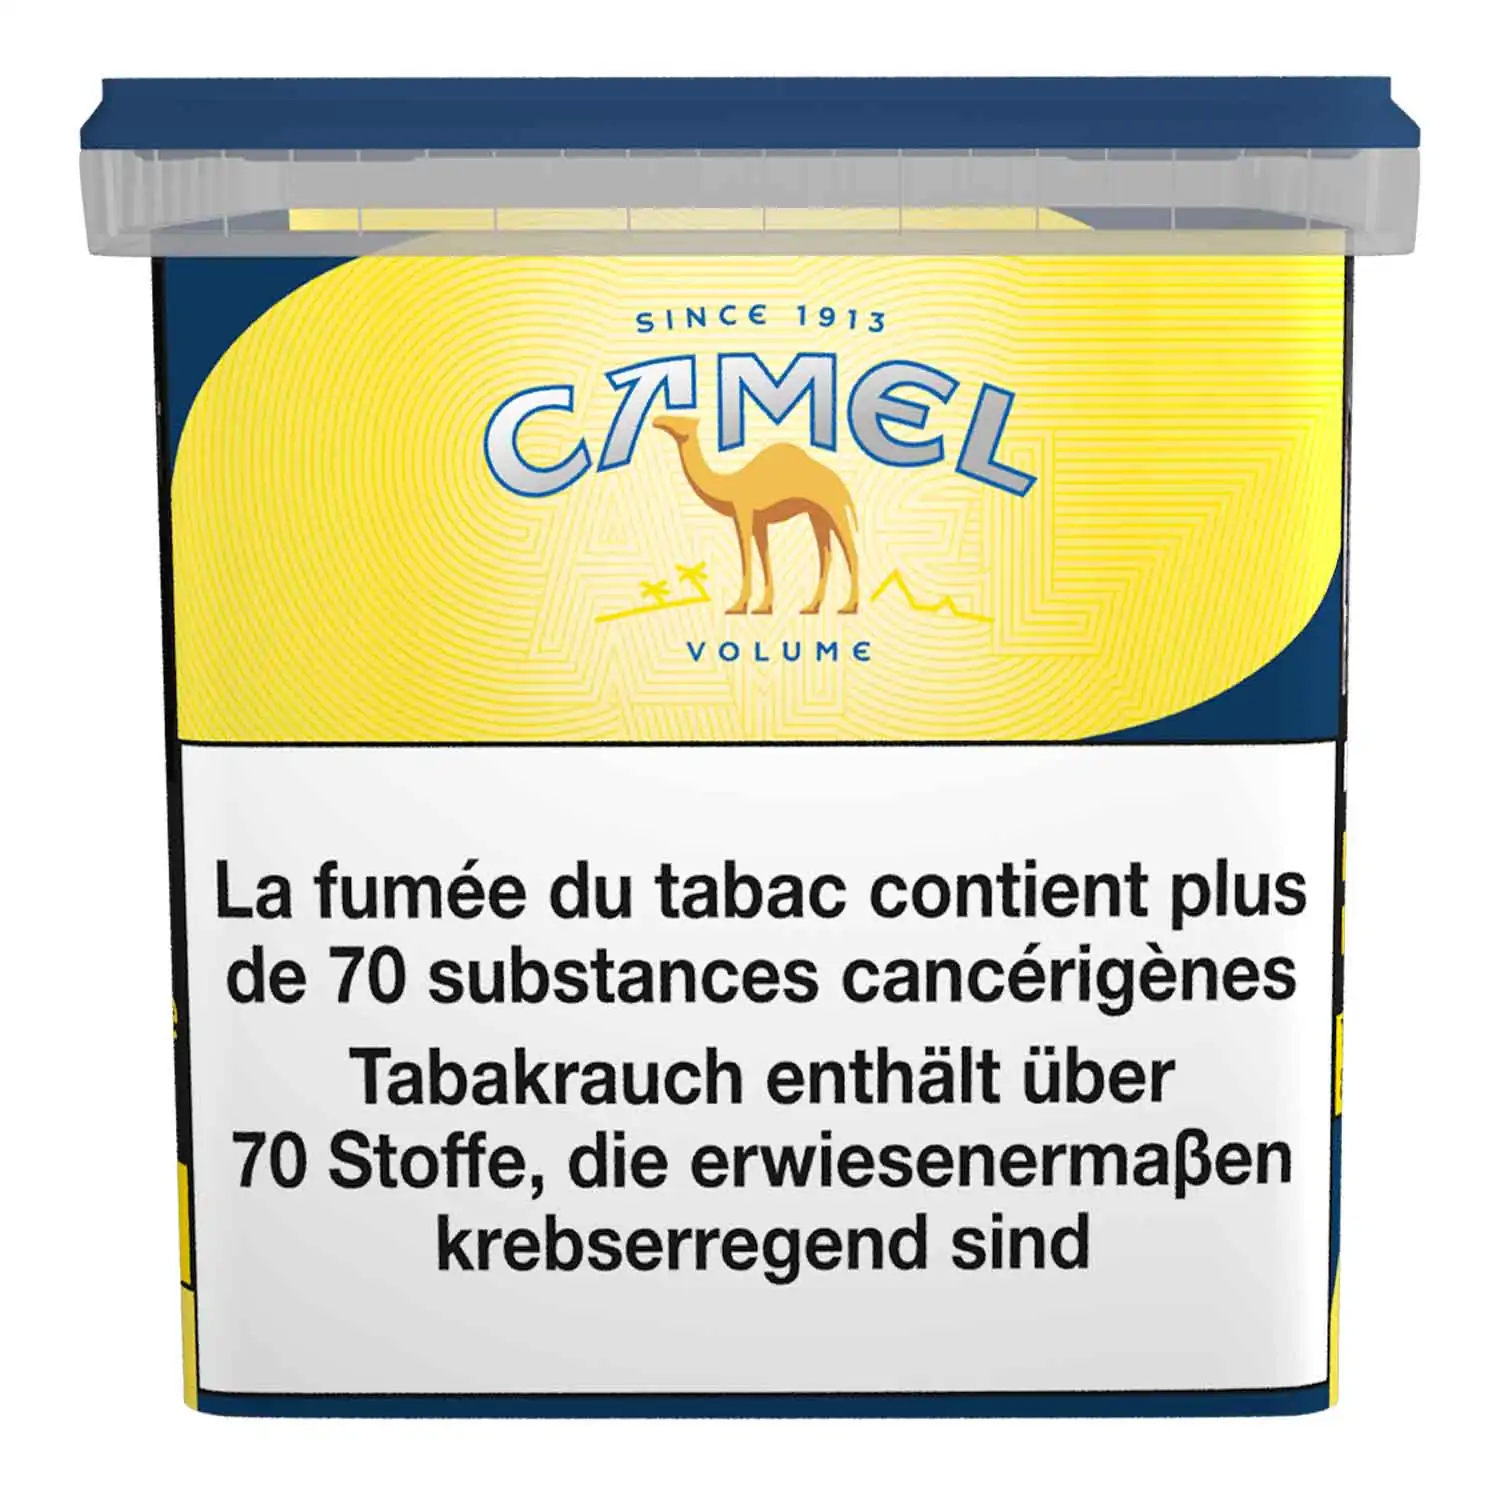 Camel volume jaune 400g - Buy at Real Tobacco